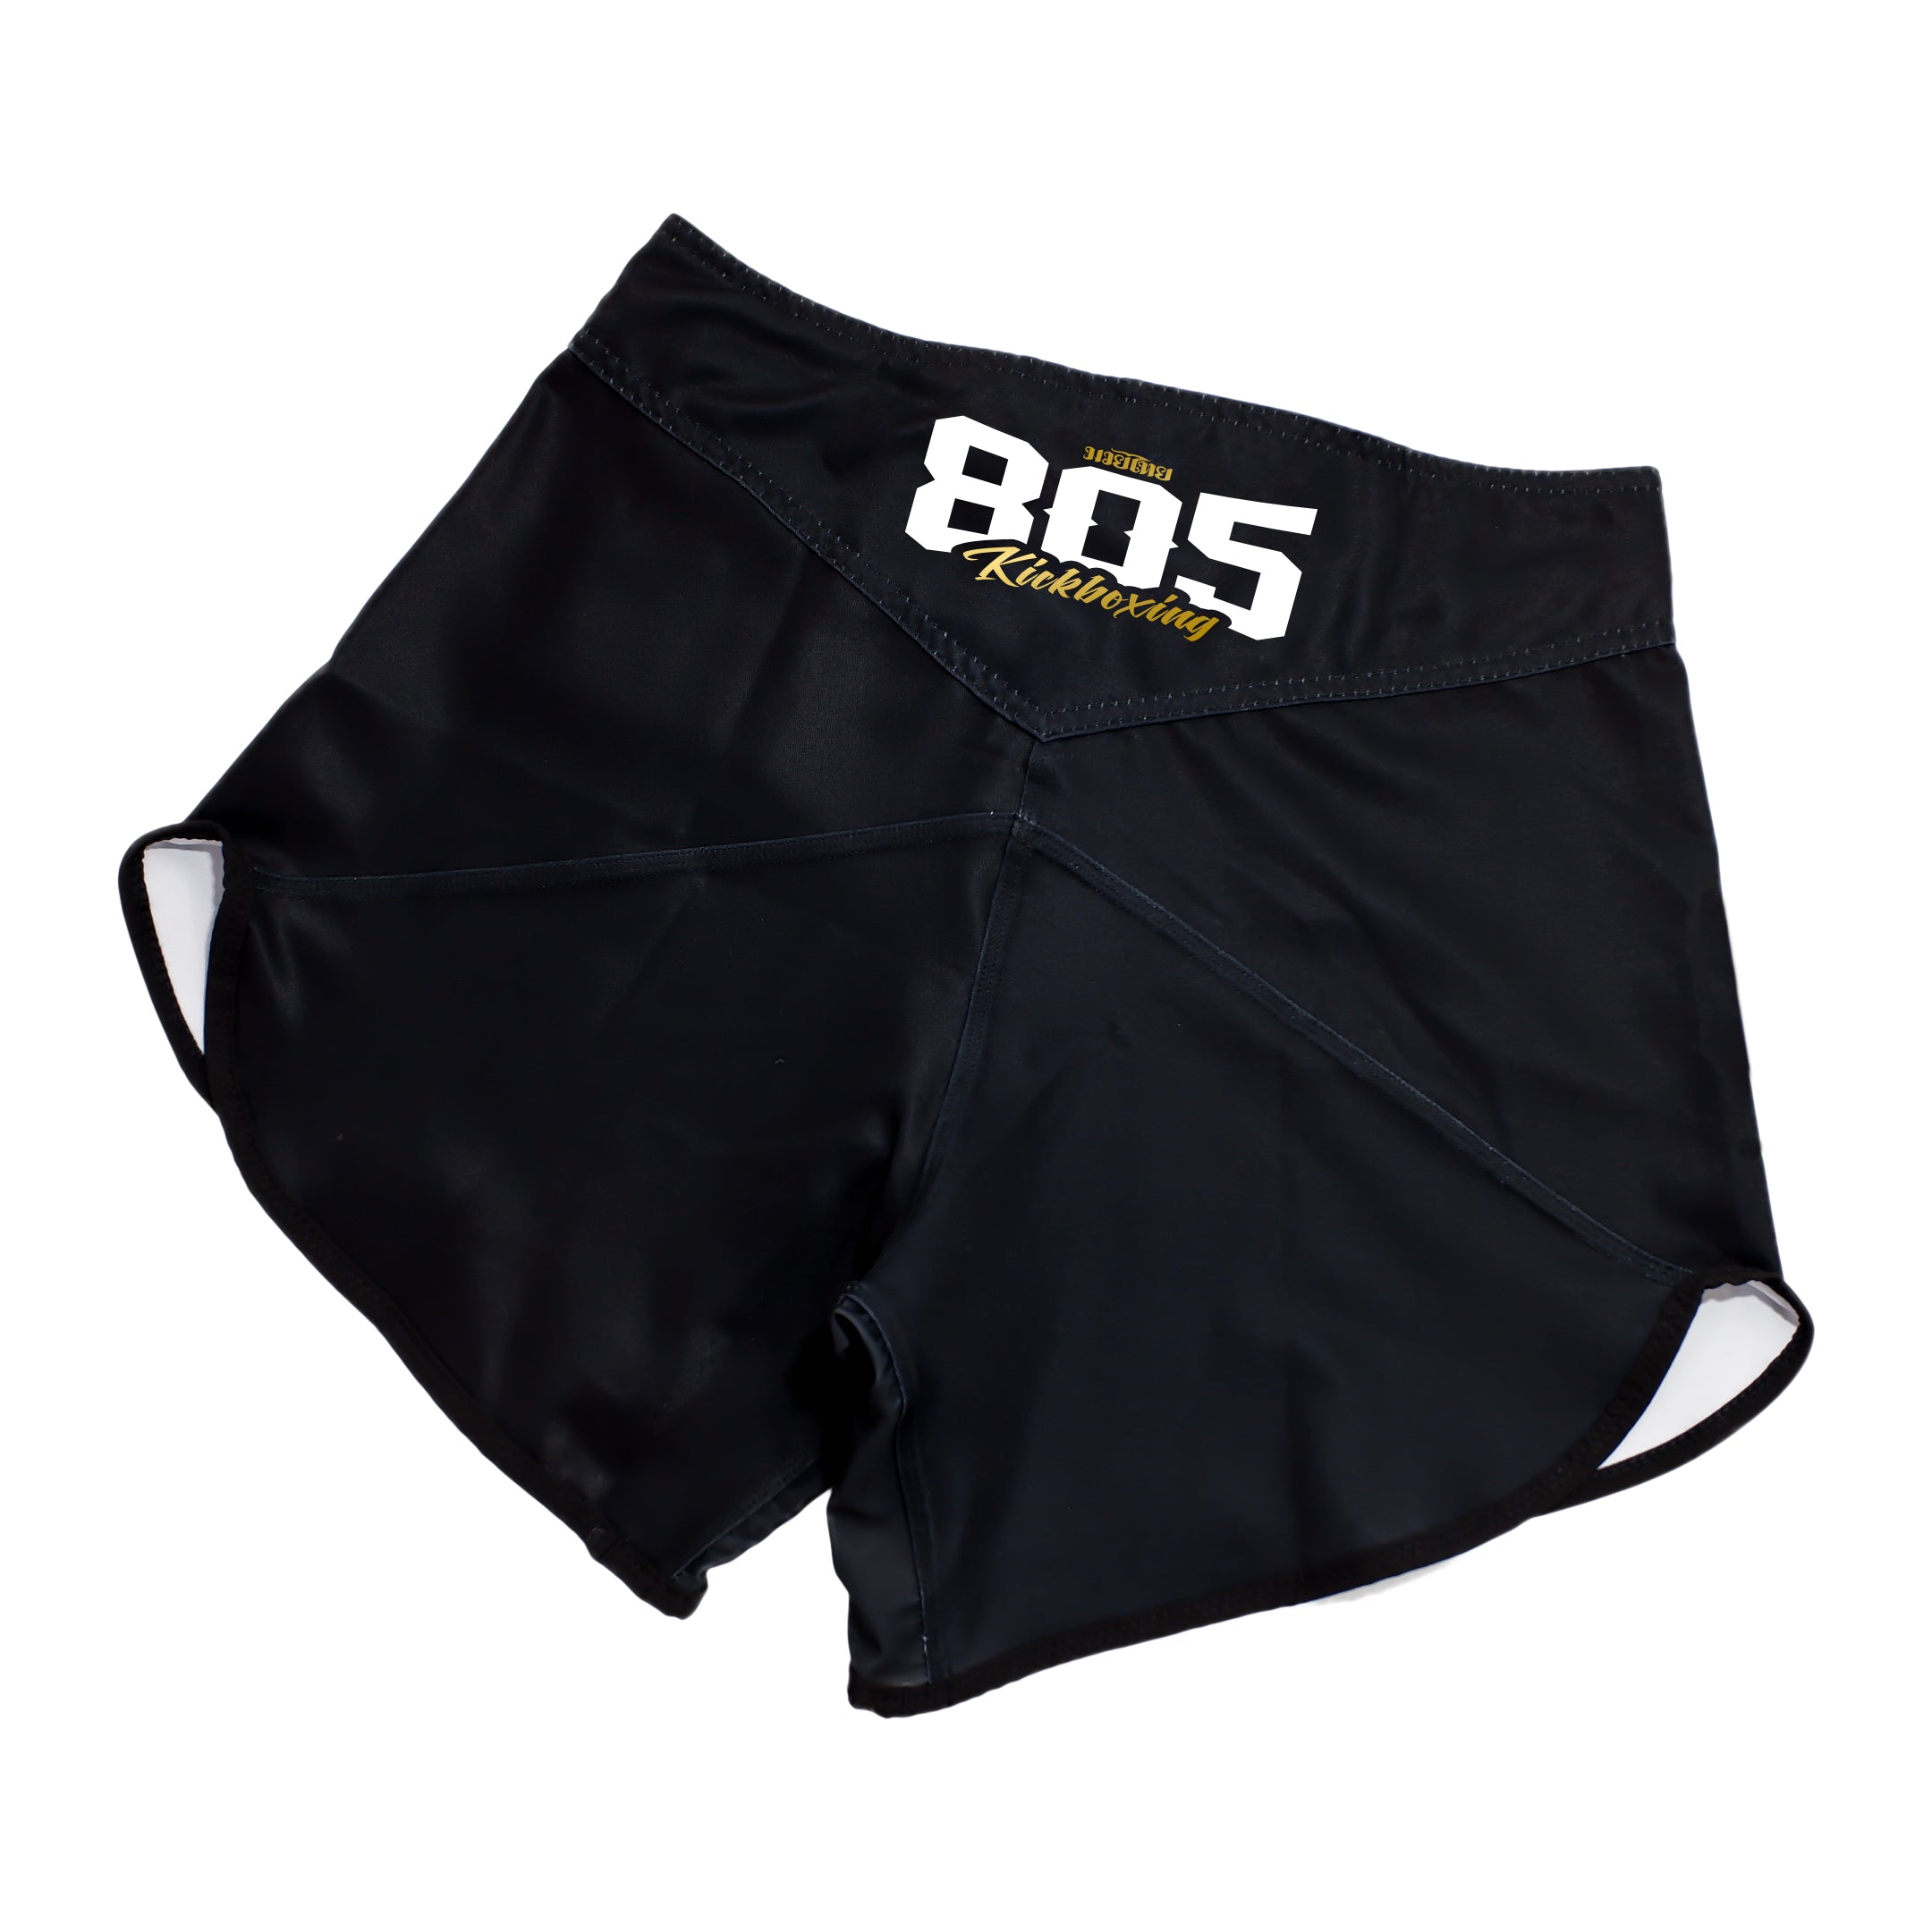 805 Kickboxing Shorts (Red & Gold)